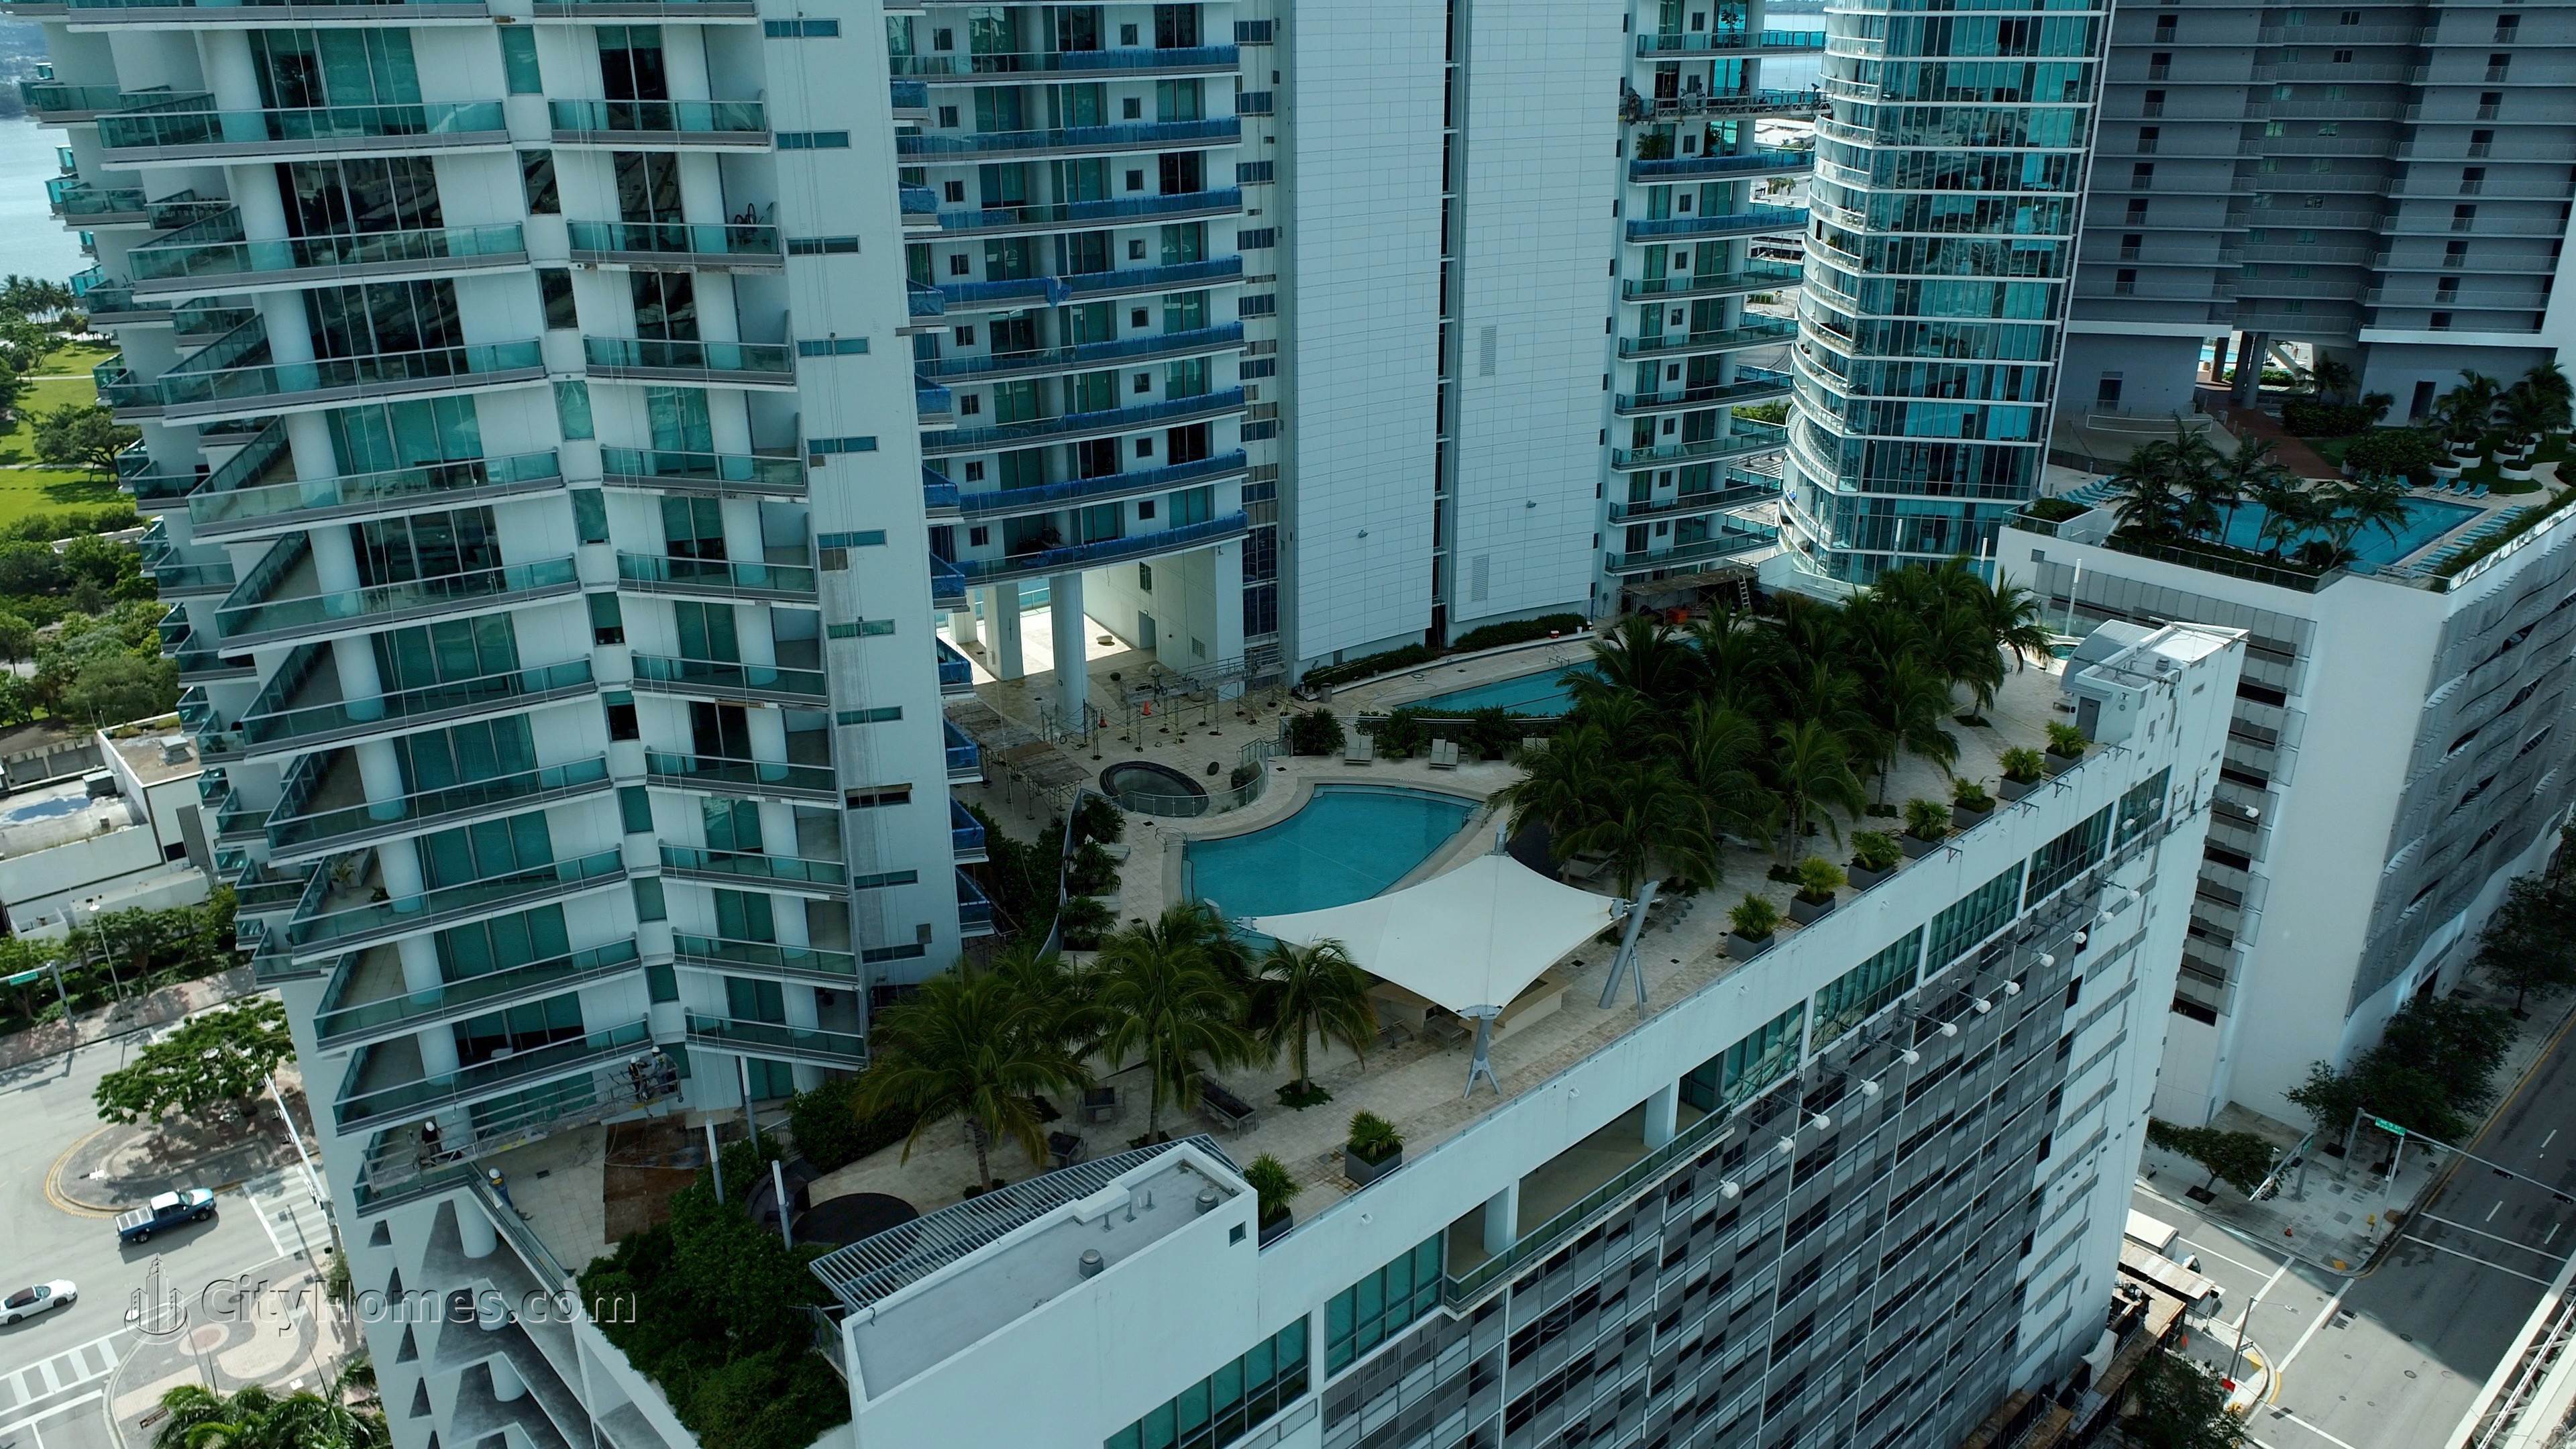 5. 900 Biscayne Bay building at 900 Biscayne Boulevard, Miami, FL 33132